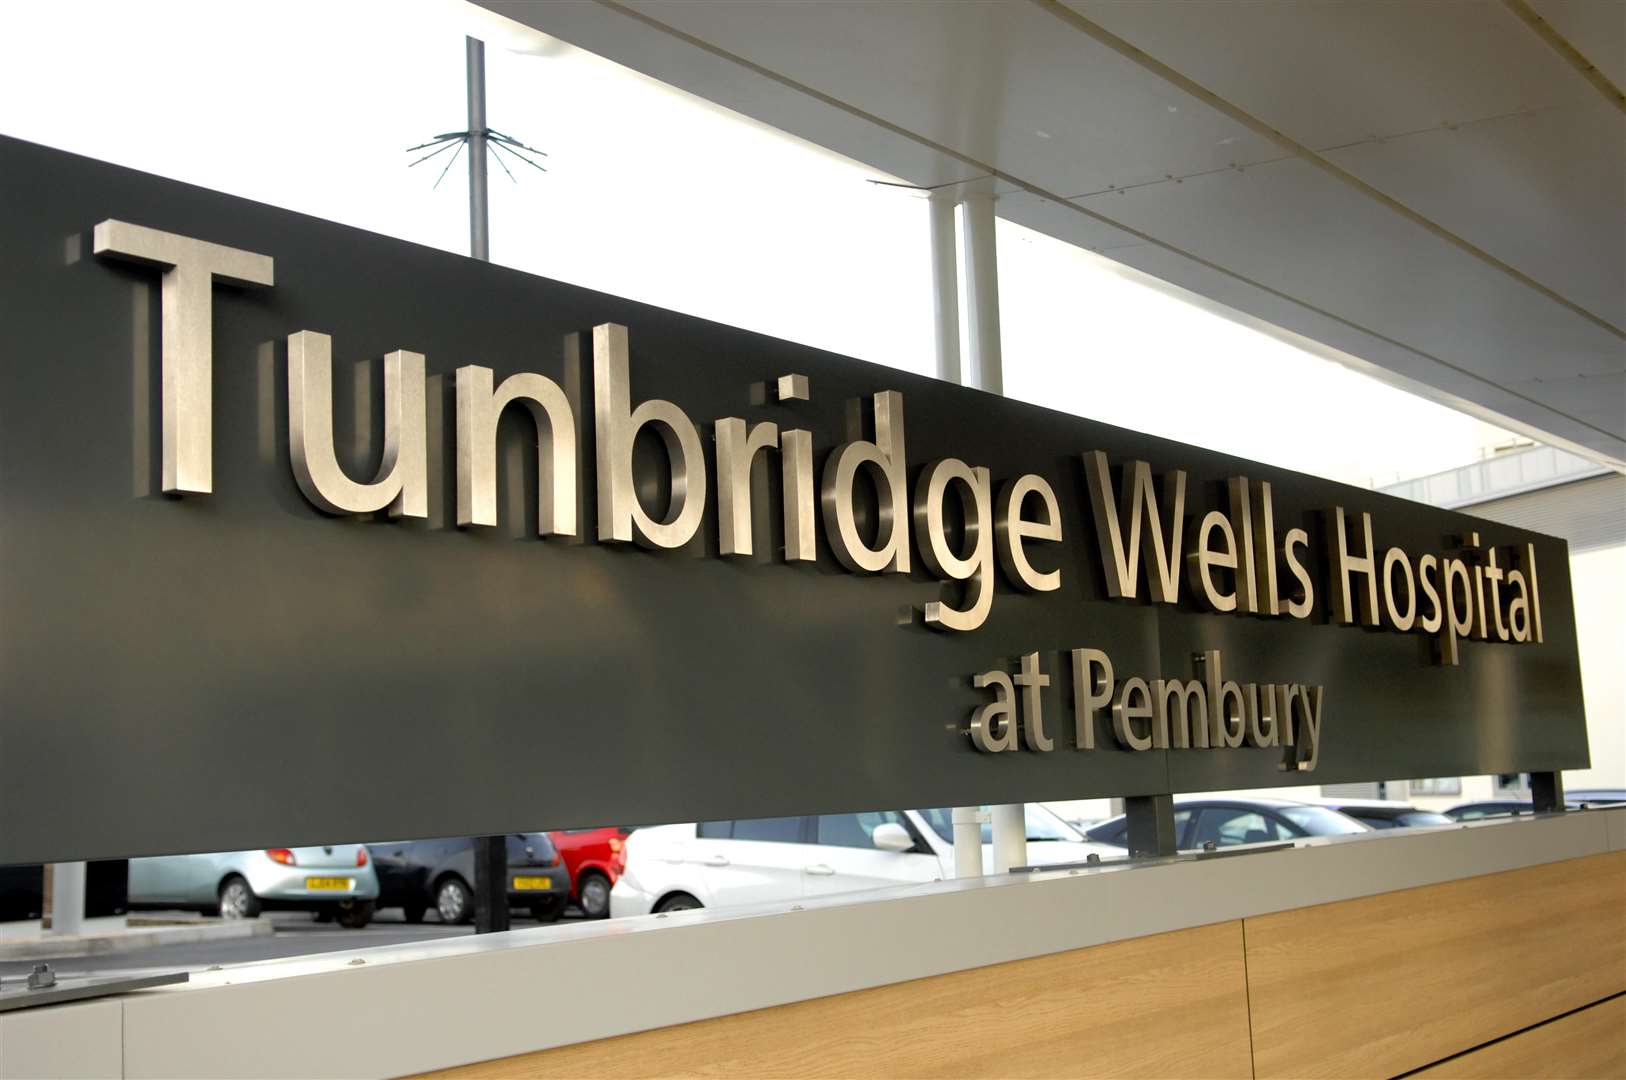 The Tunbridge Wells Hospital at Pembury. Picture Matthew Walker